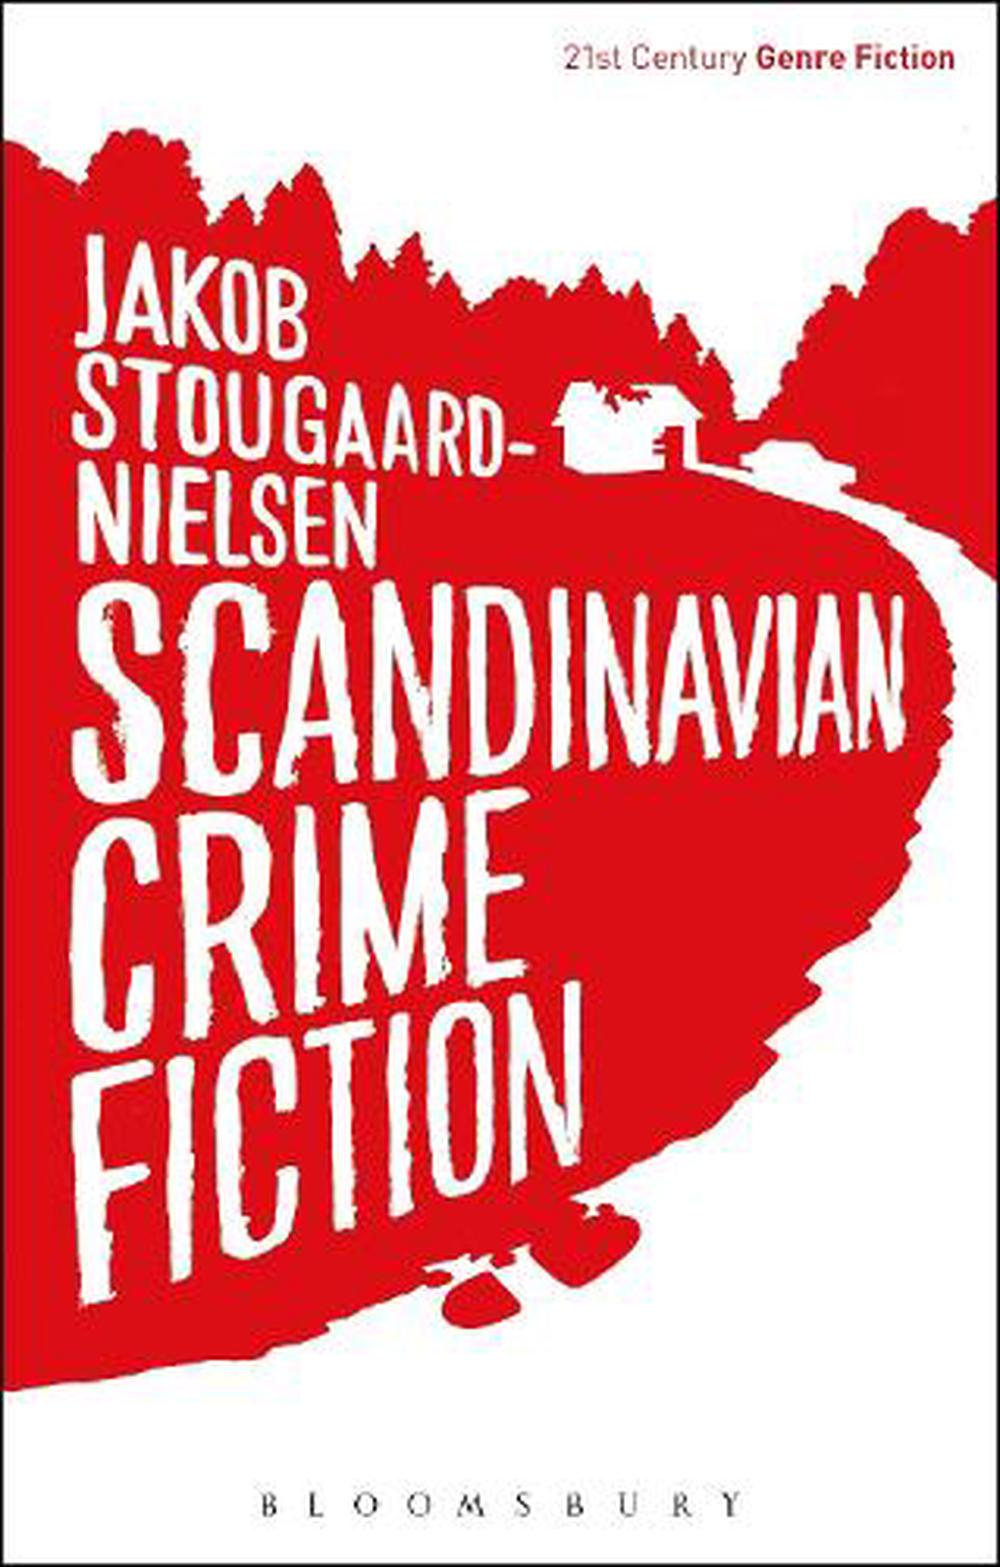 Scandinavian Crime Fiction by Jakob Stougaardnielsen (English